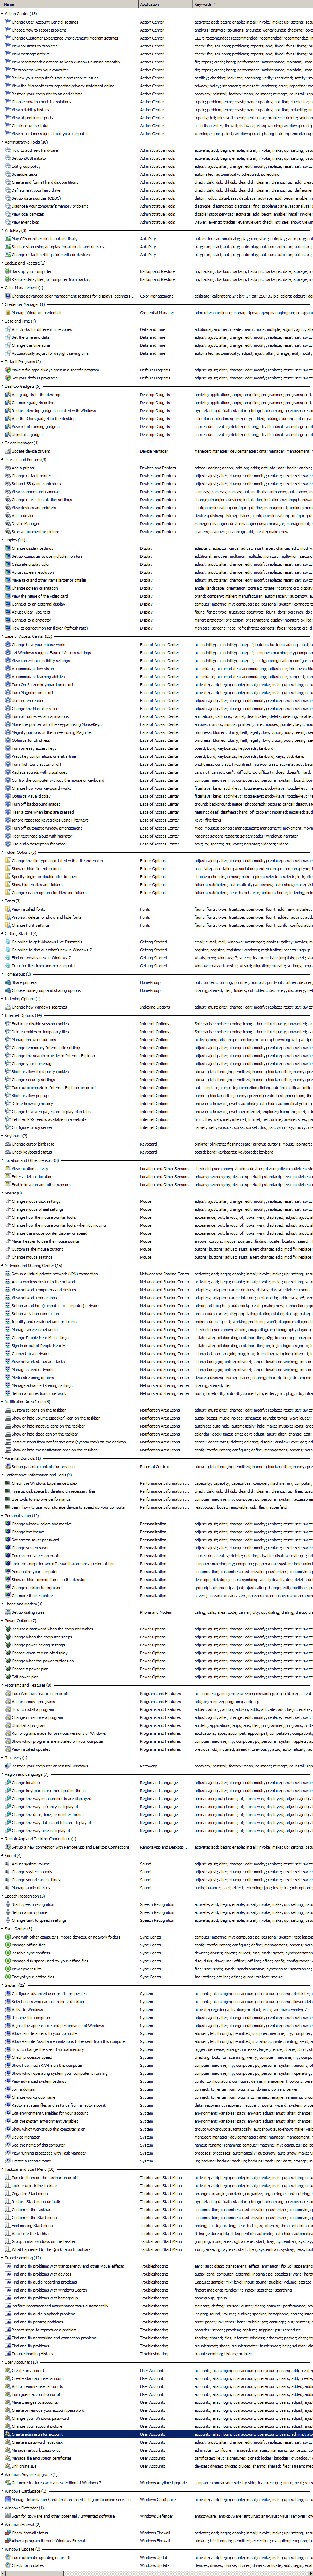 Godmode folder contents on Windows 7